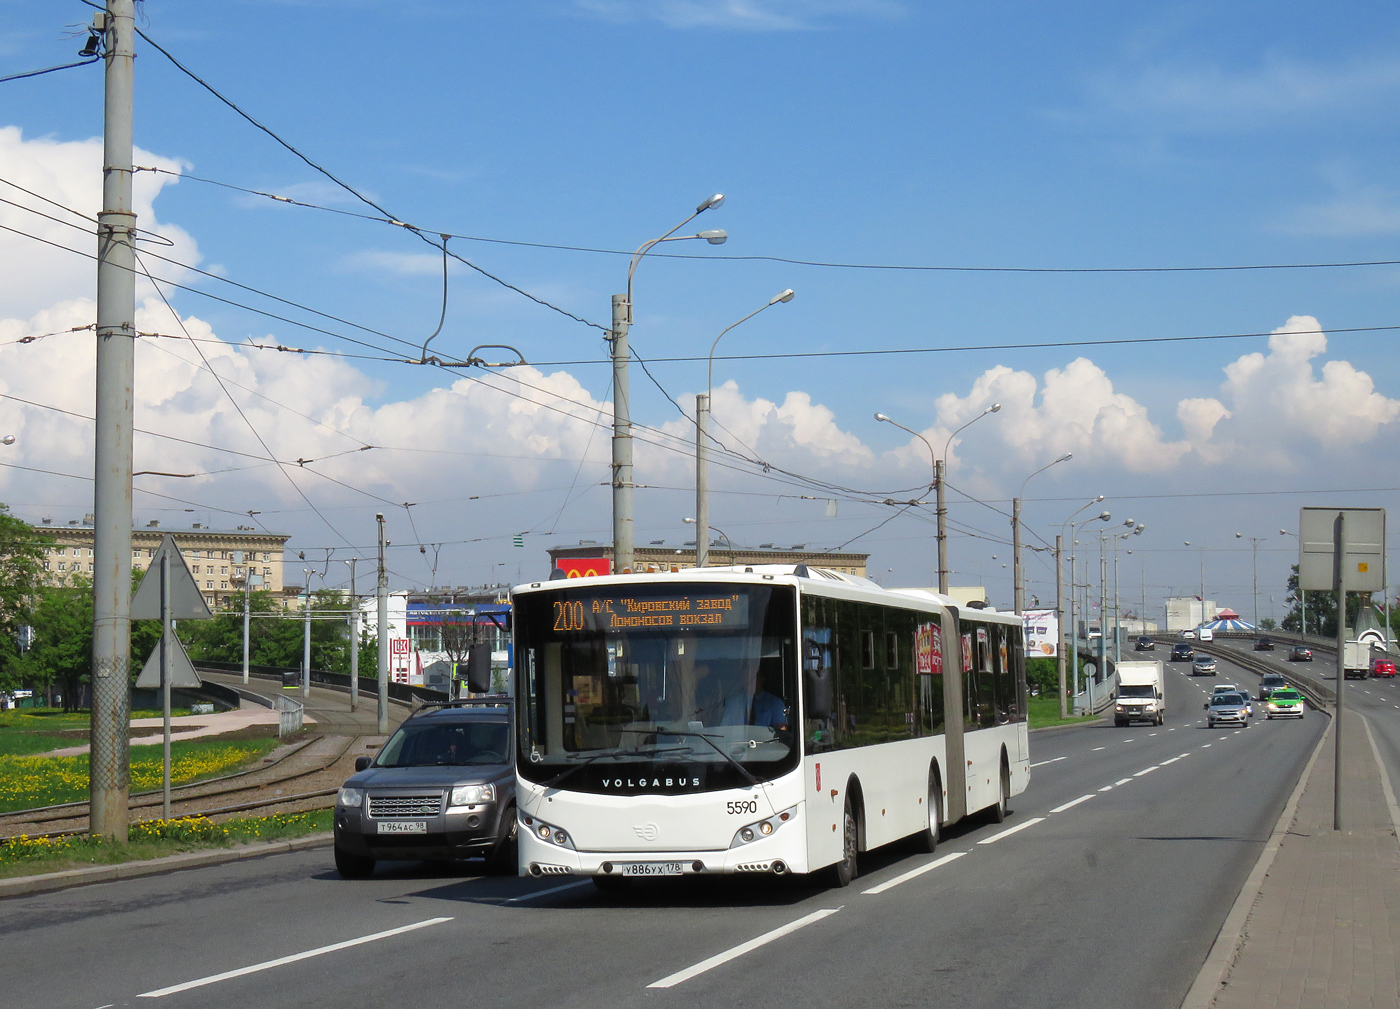 Sanktpēterburga, Volgabus-6271.05 № 5590